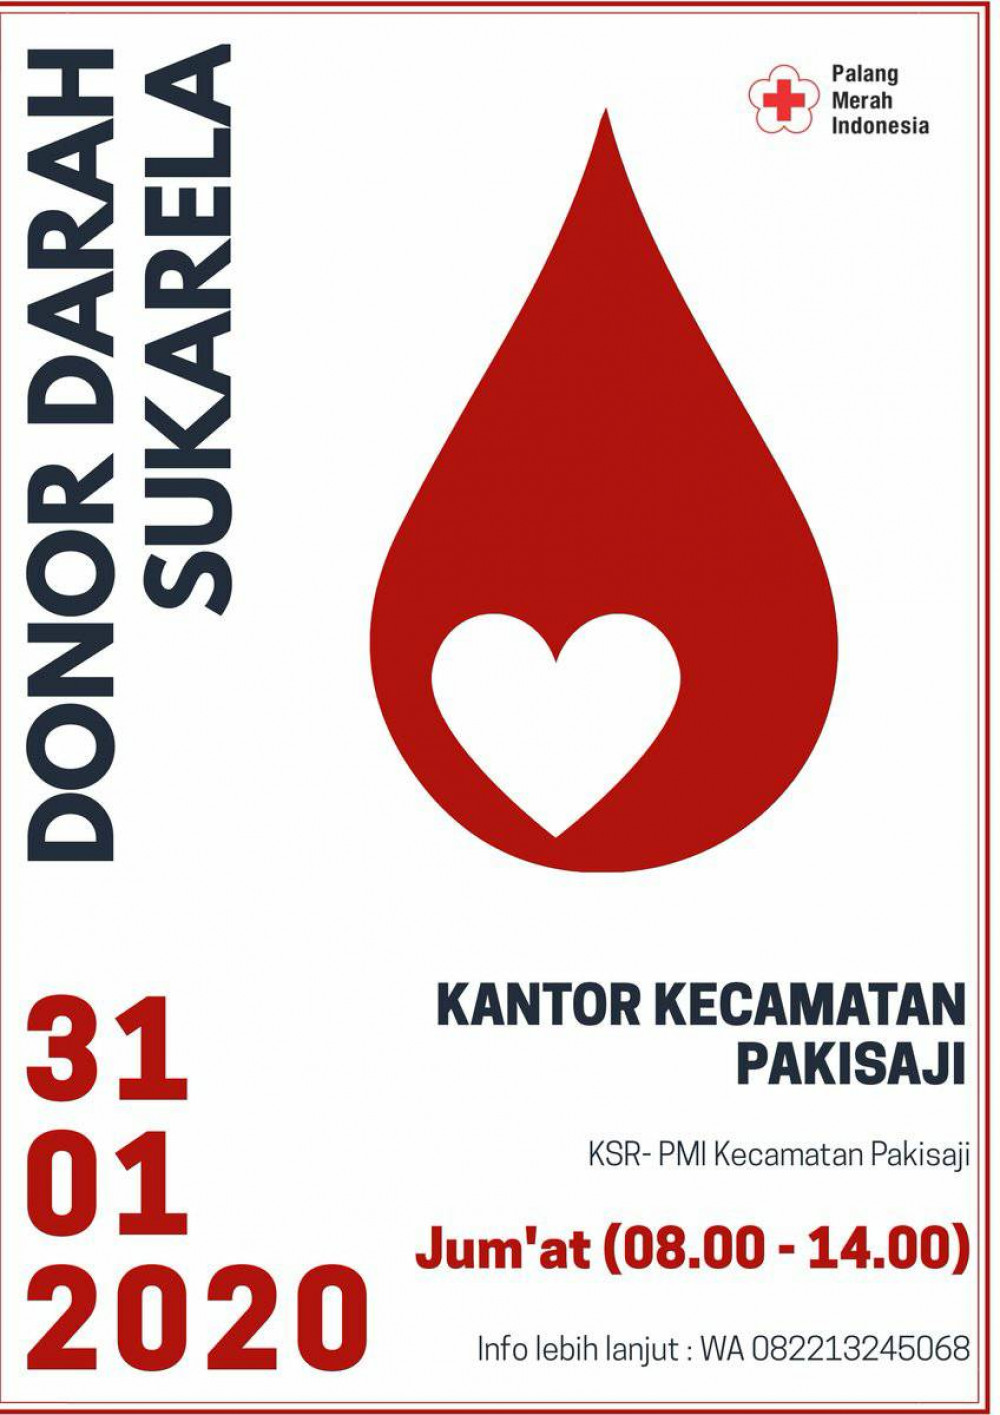 Donor Darah Sukarela